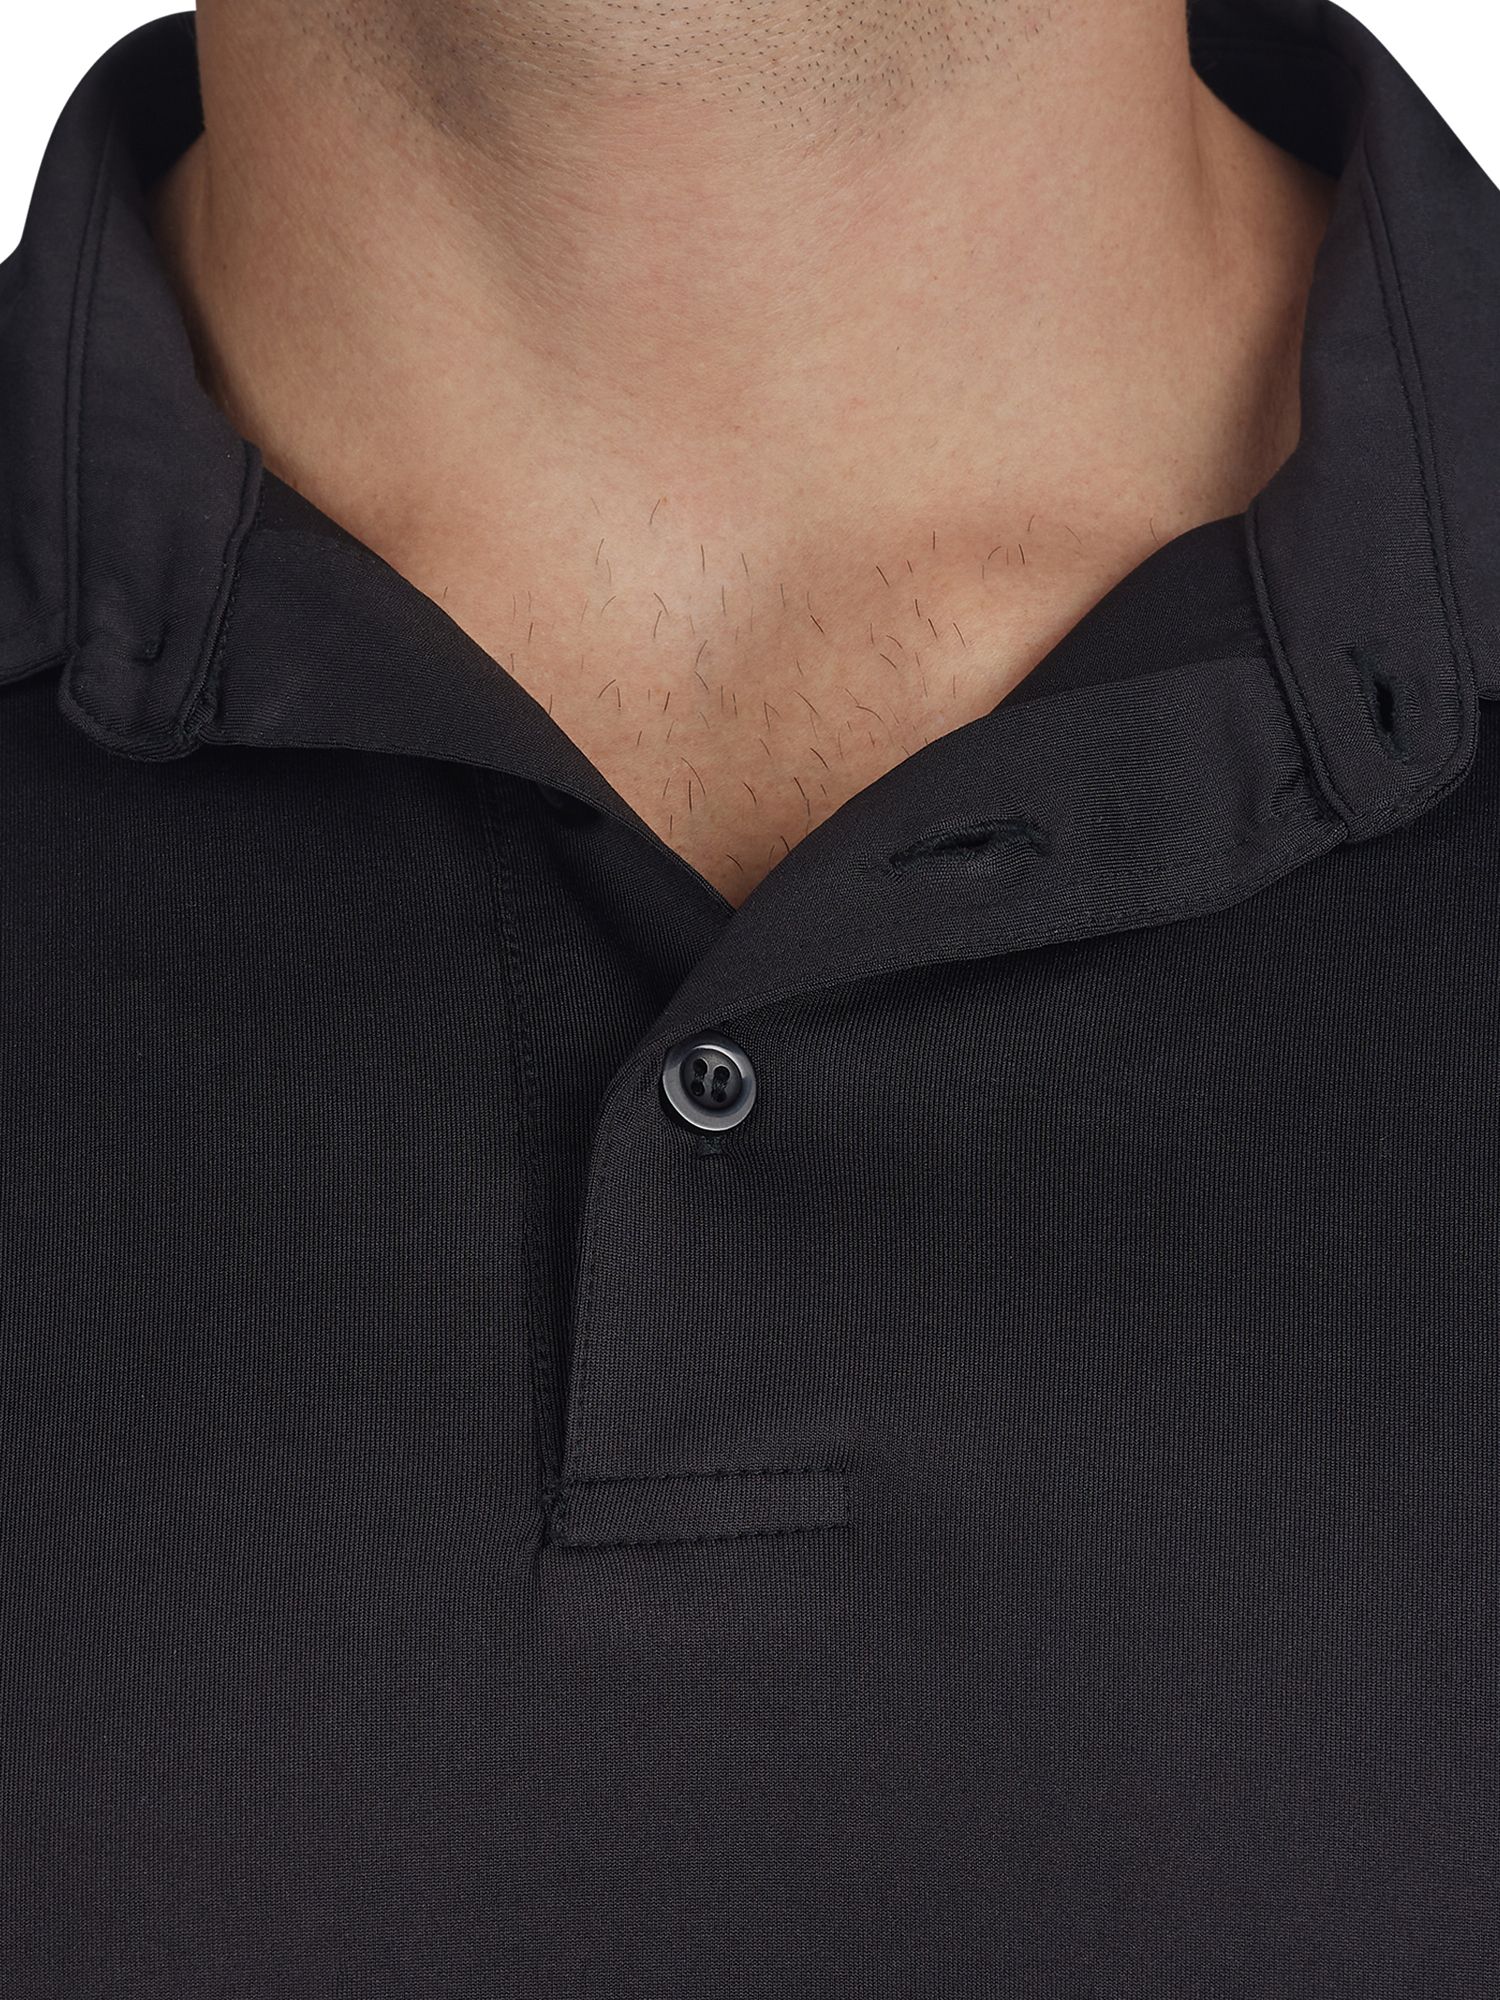 Raging Bull Golf Tech Polo Shirt, Black, S